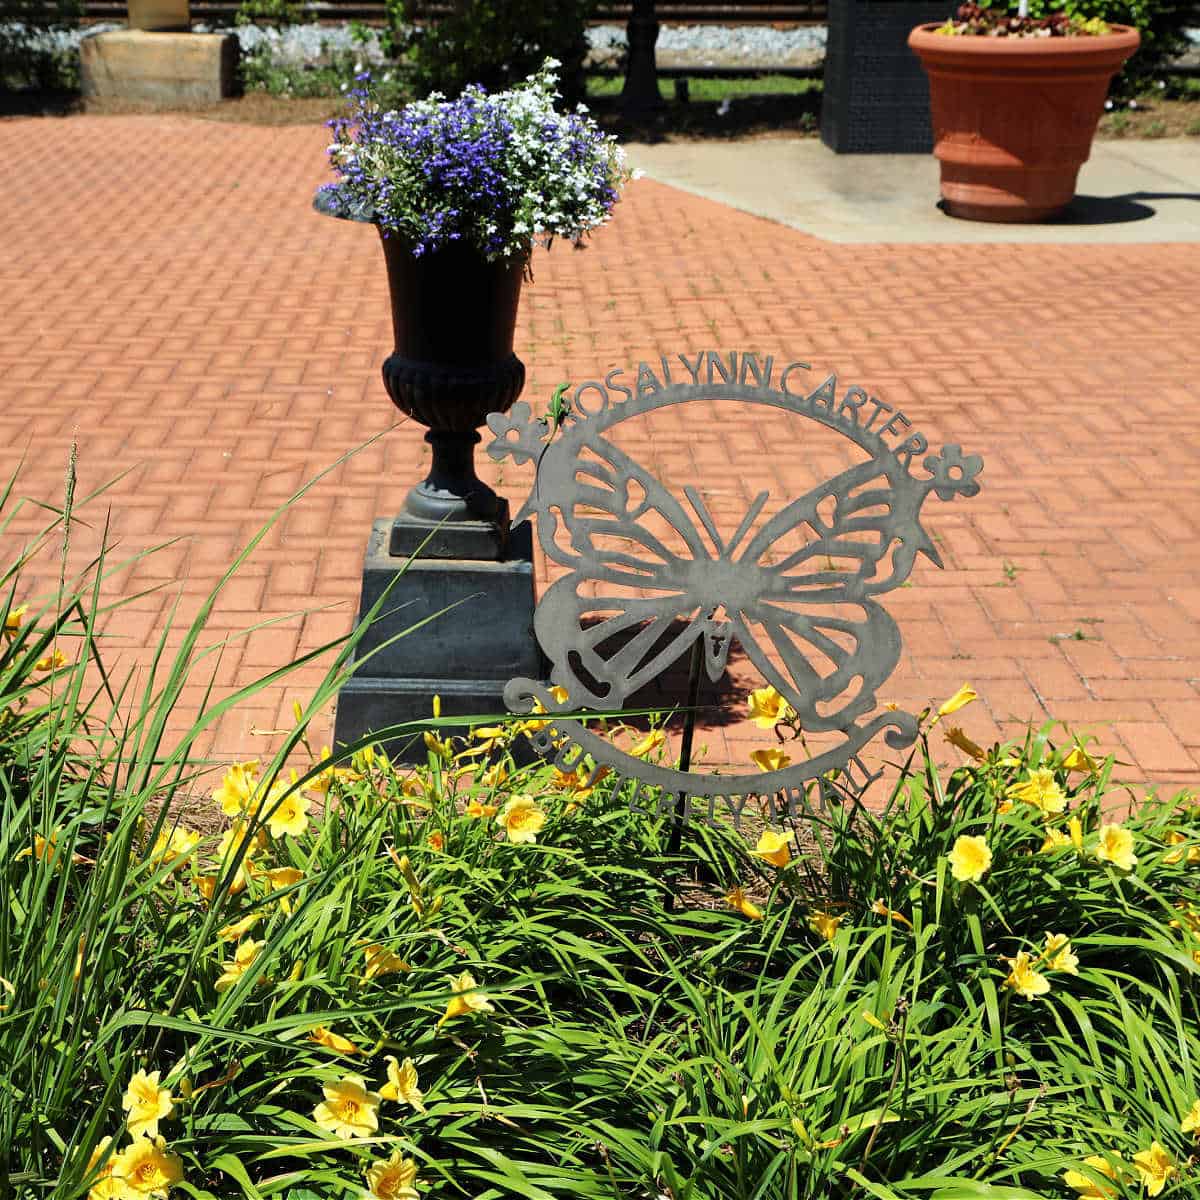 Rosalynn Carter's Gardens in Plains Georgia